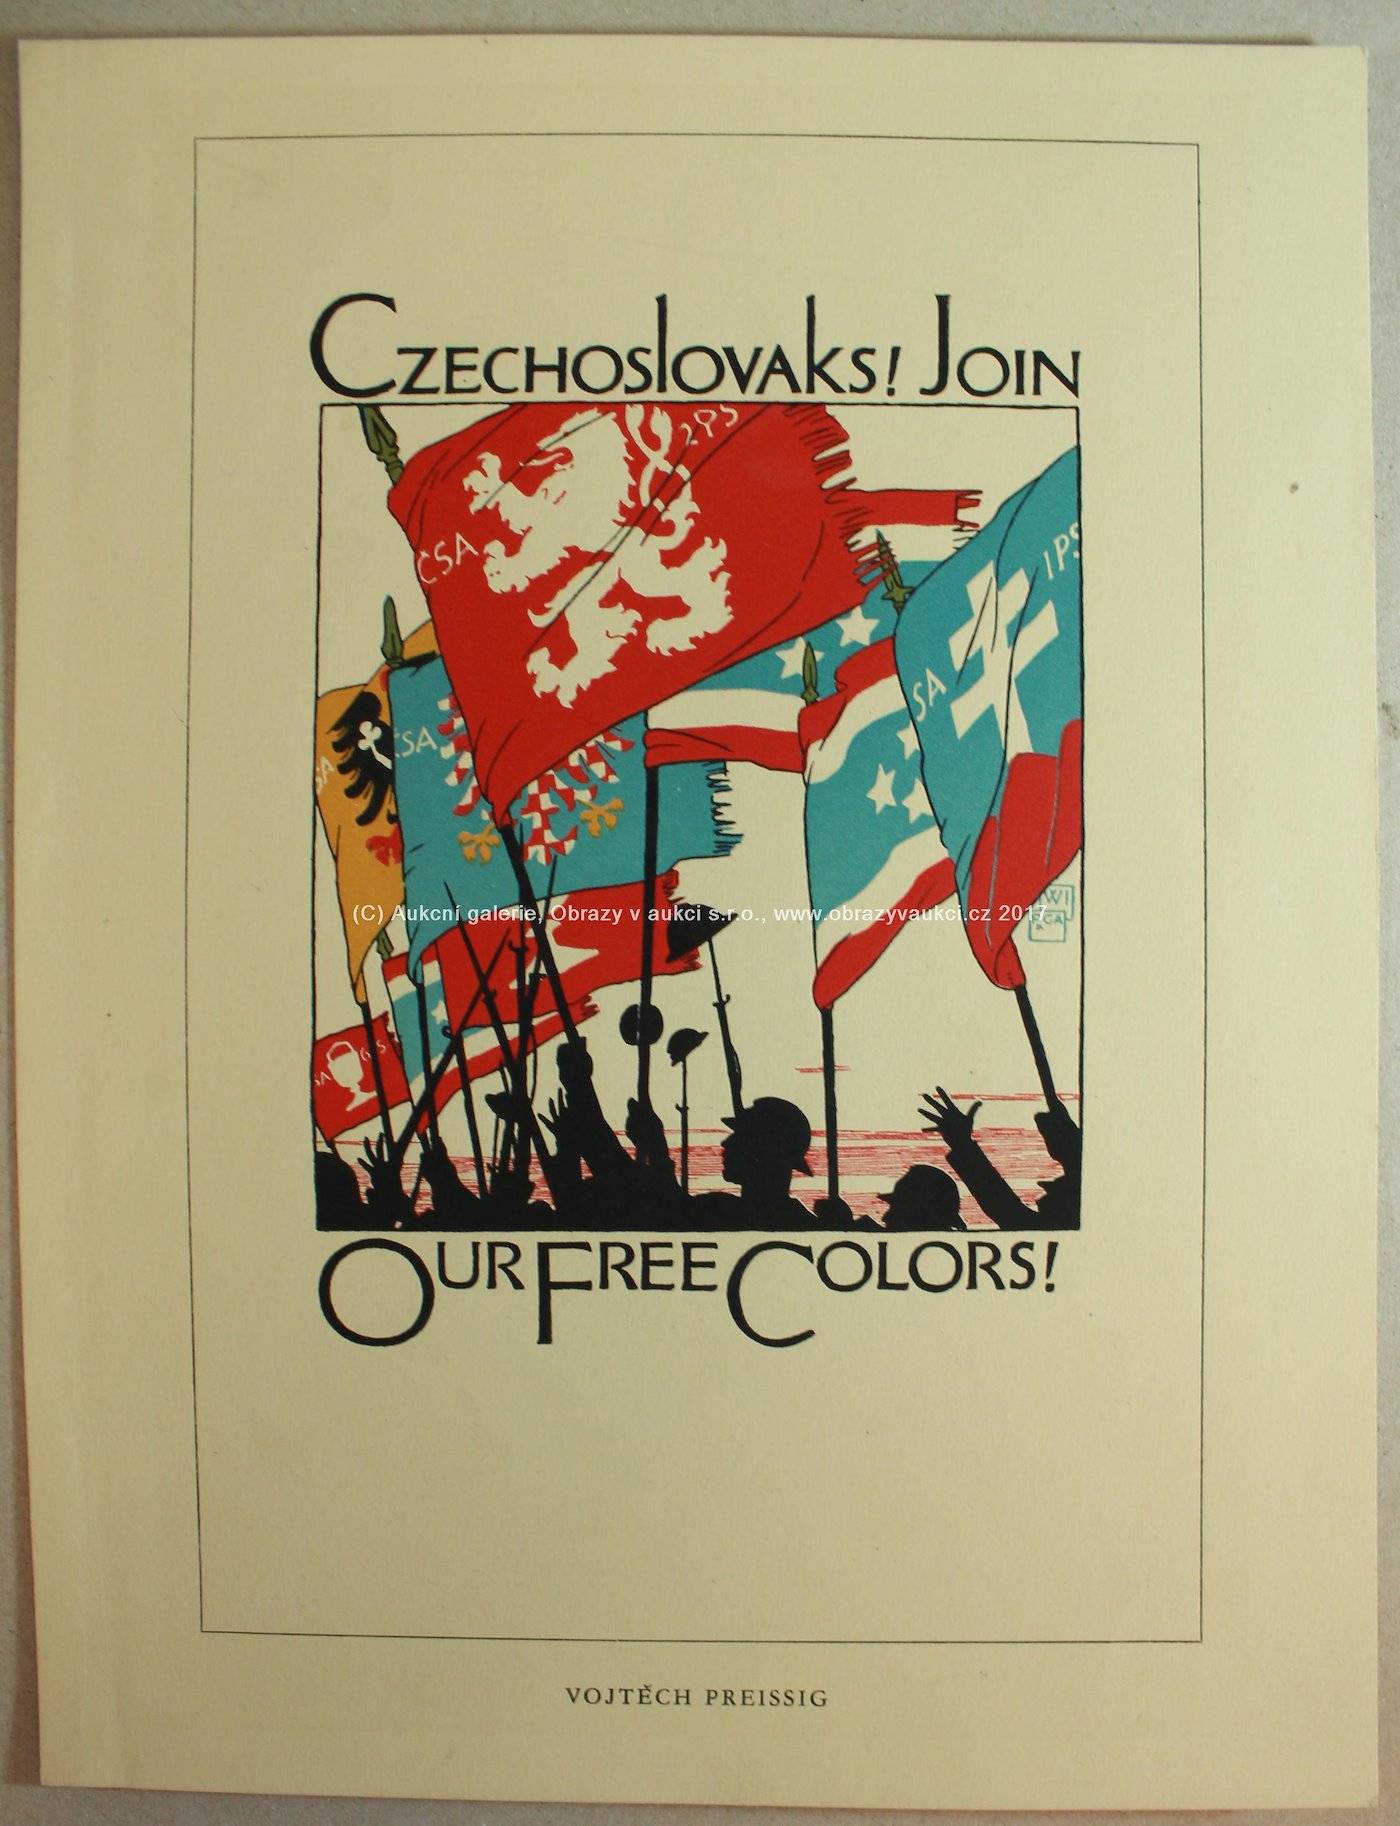 Vojtěch Preissig - "Czechoslovaks! Join our free colors!"